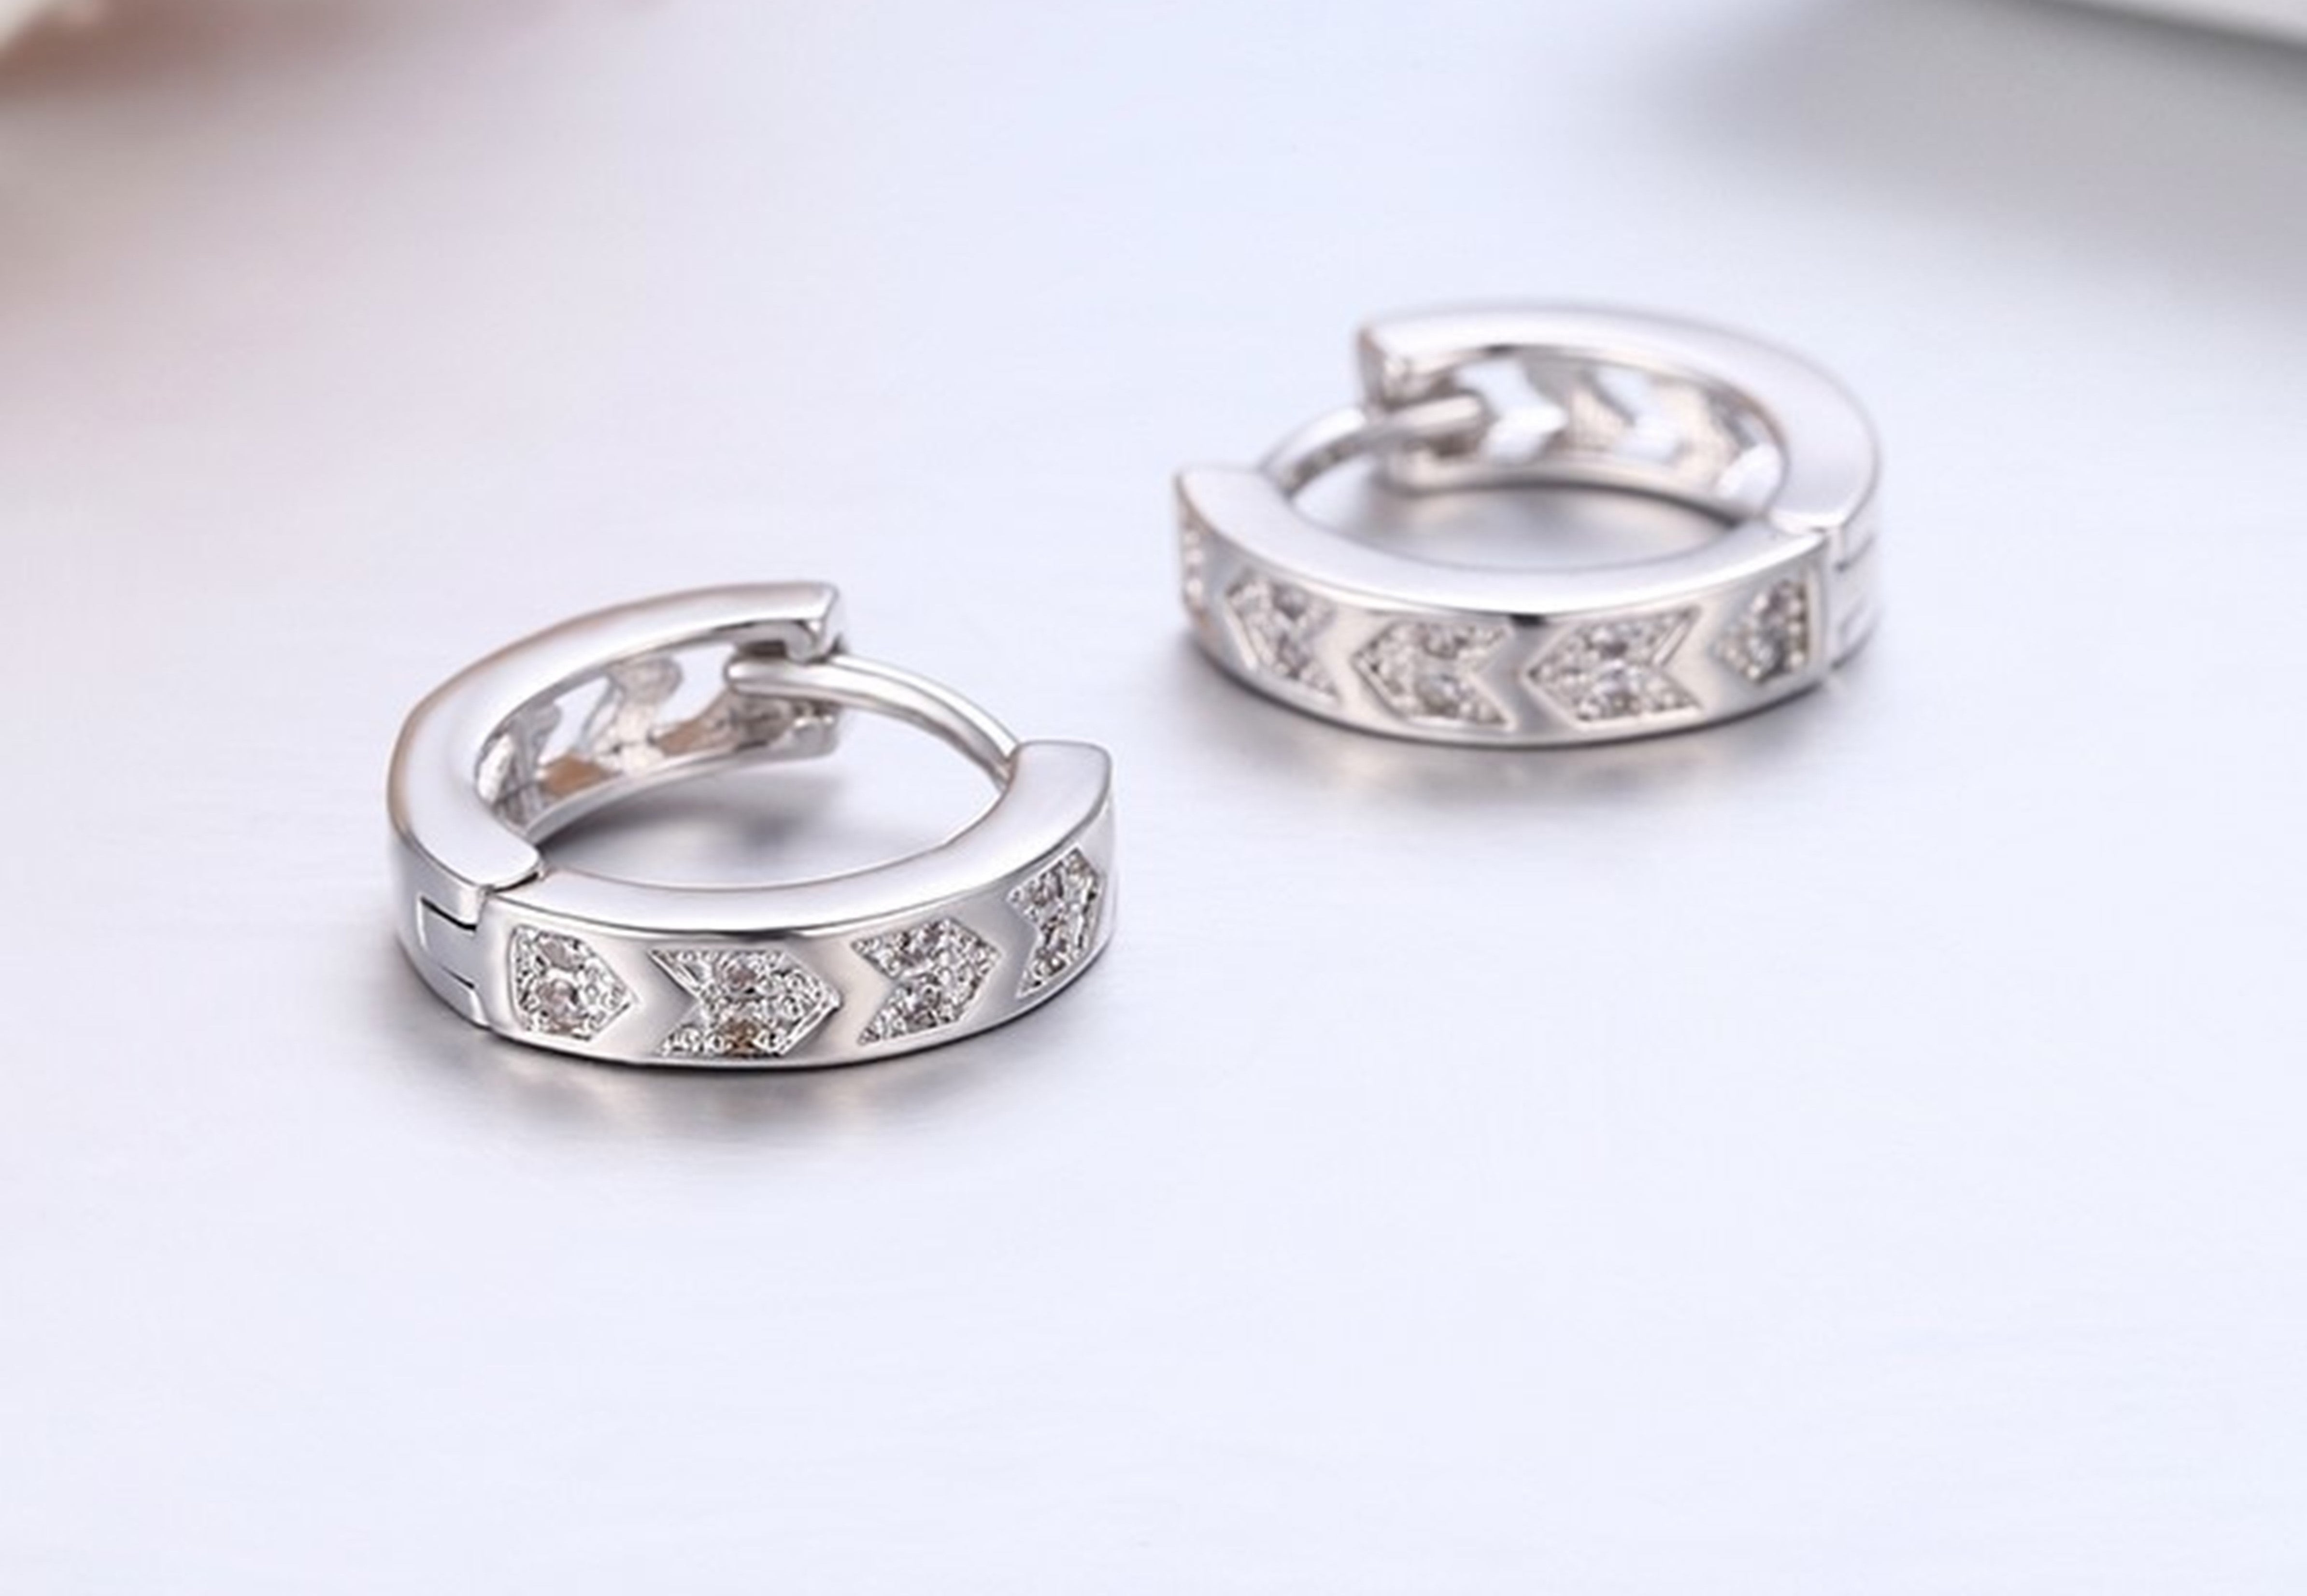 Radiant Elegance: Lush Silver Hoop Earrings - 925 Sterling Silver with Zircon Stones!